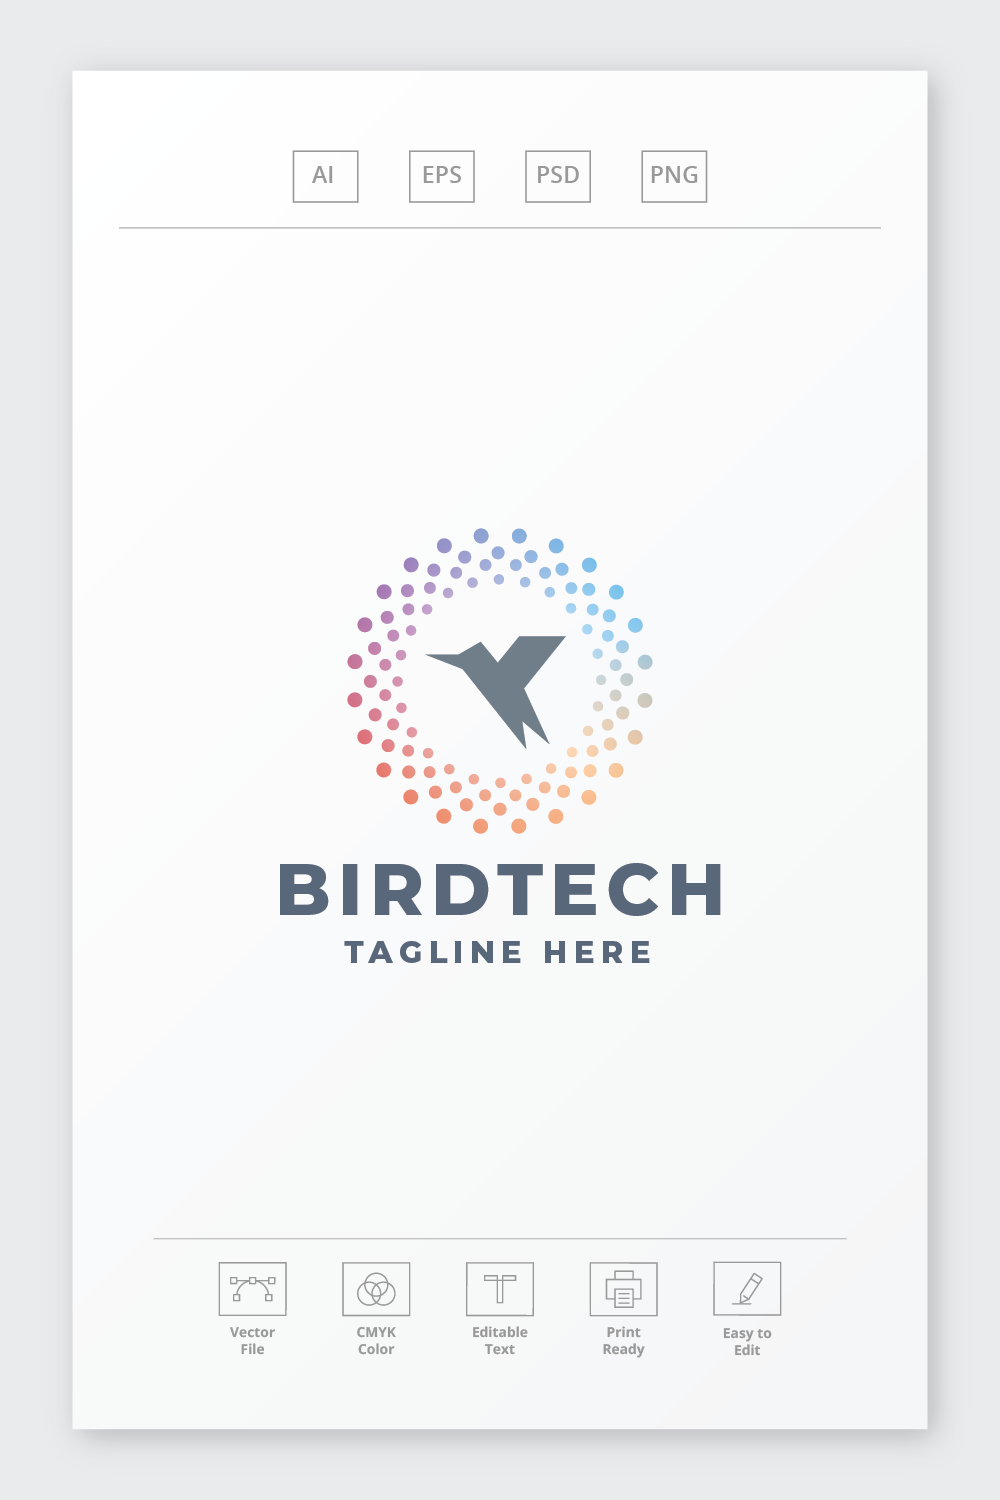 Bird Tech Logo pinterest preview image.